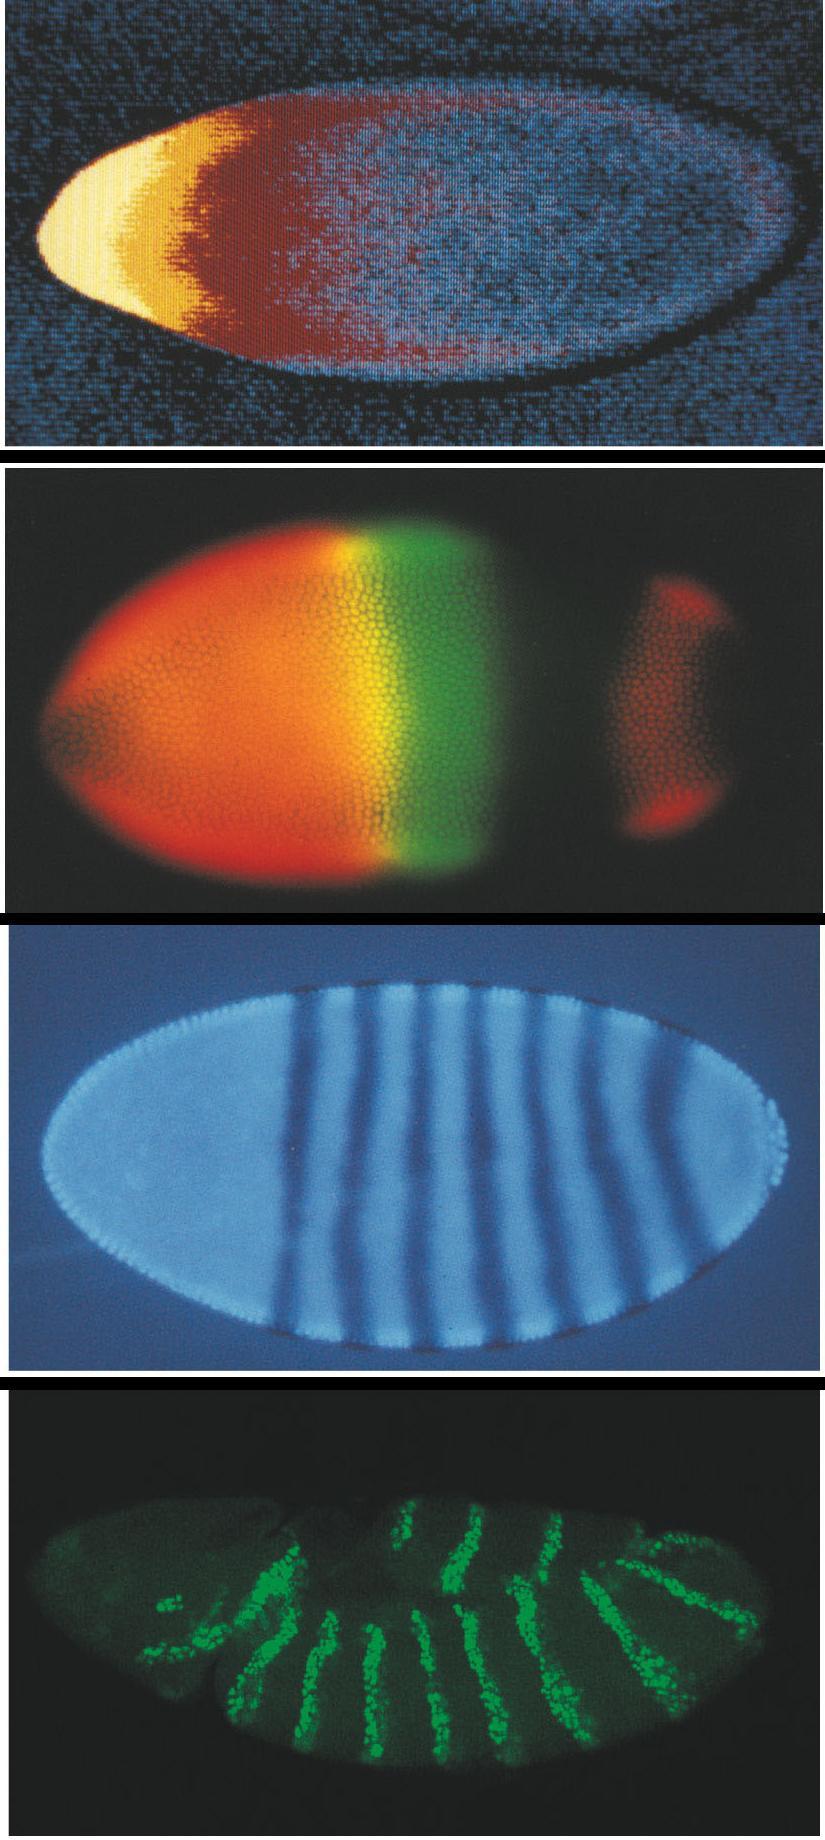 Anterior Posterior Body Plan Drosophila use a hierarchy of ge